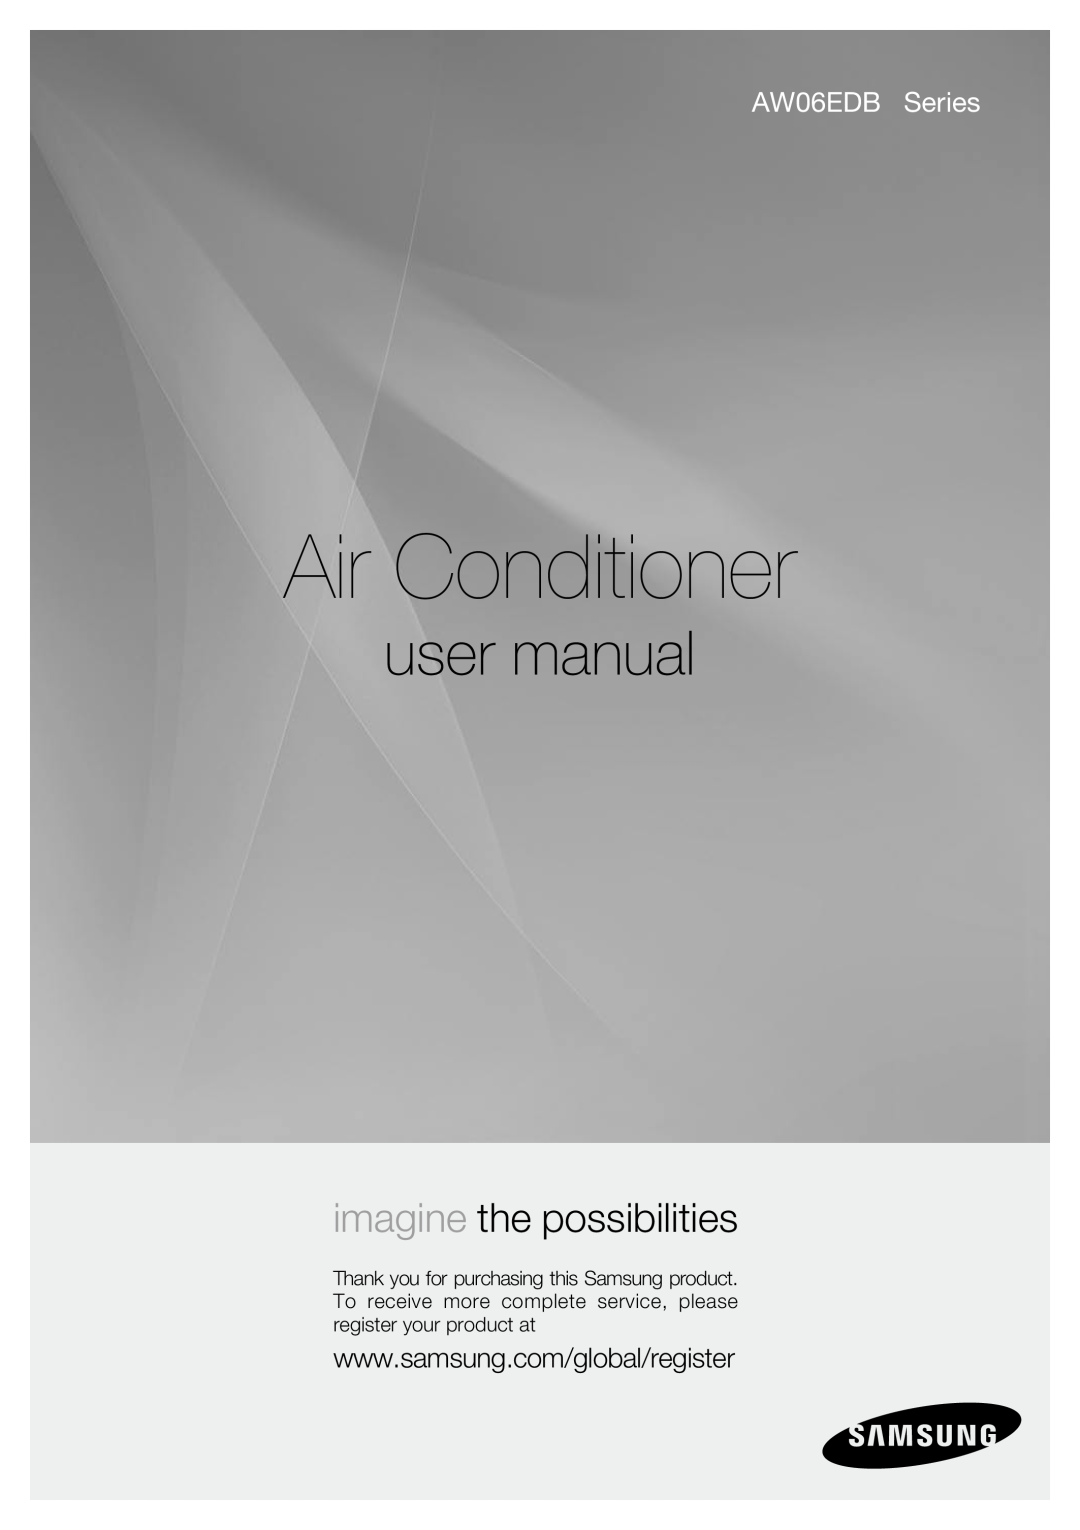 Samsung DB98-29033A user manual Air Conditioner, imagine the possibilities, AW06EDB Series 